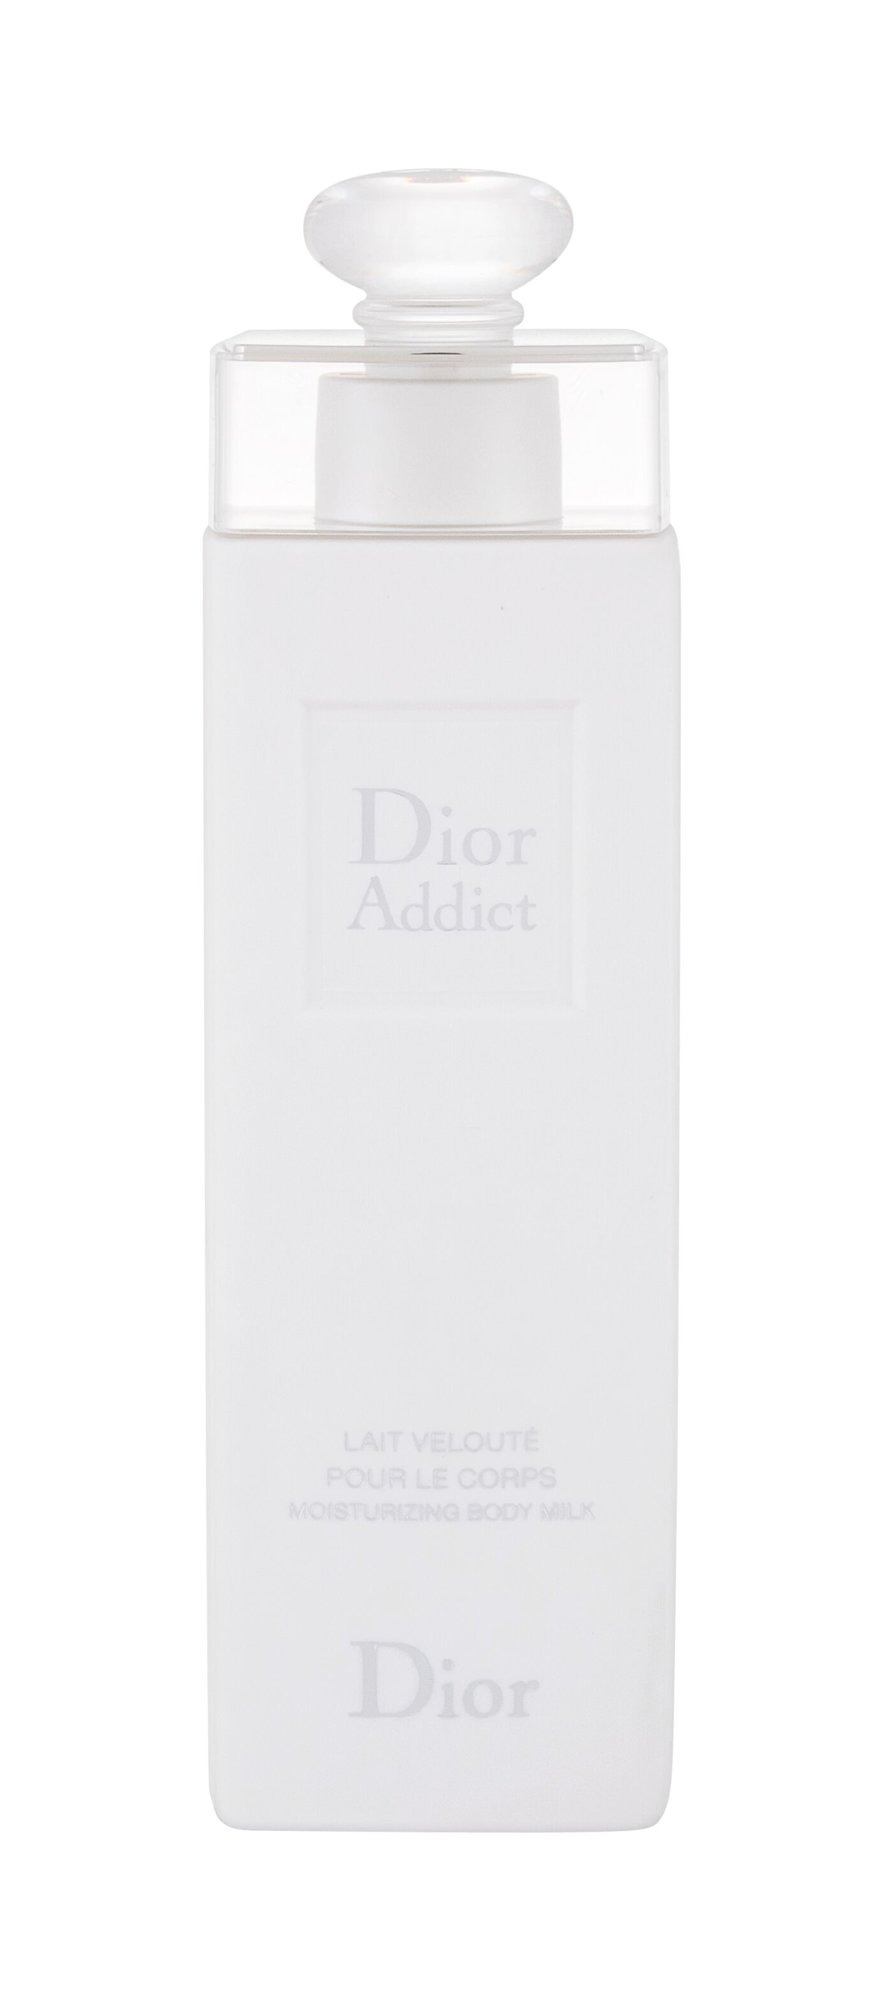 Christian Dior Addict 200ml kūno losjonas